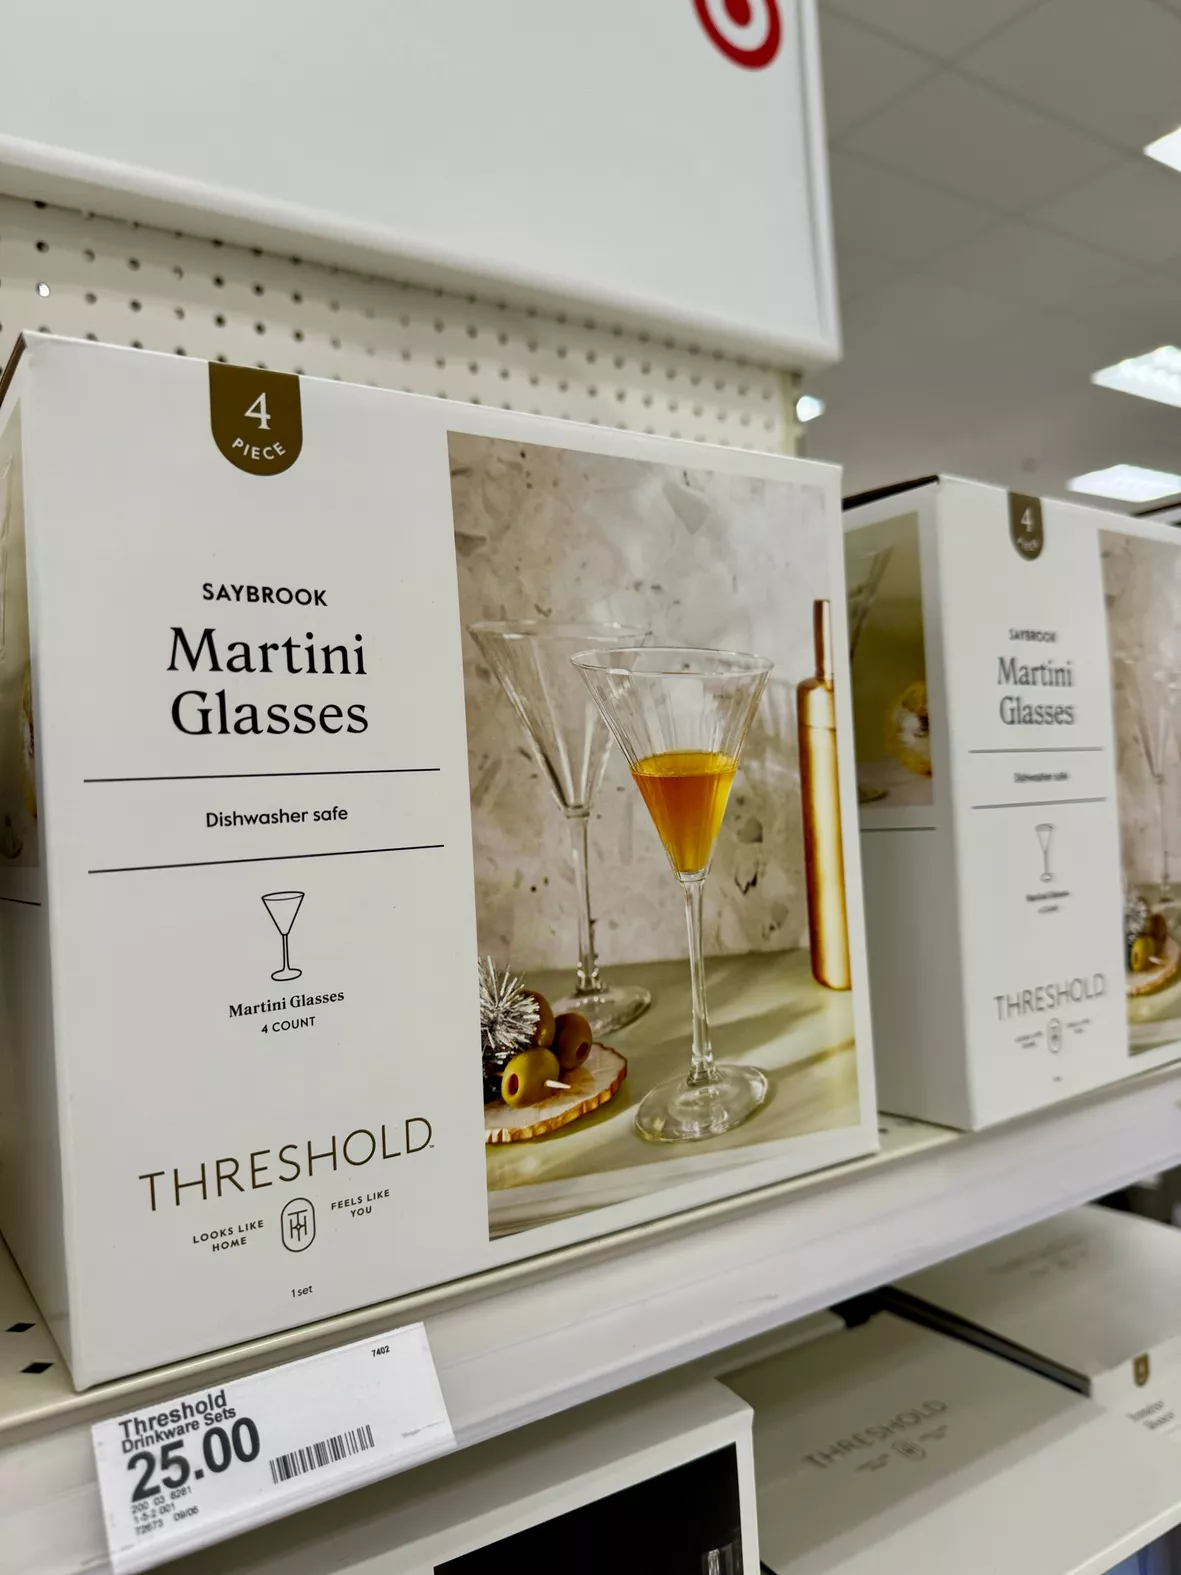 Assorted Wine Glasses - Threshold™ : Target